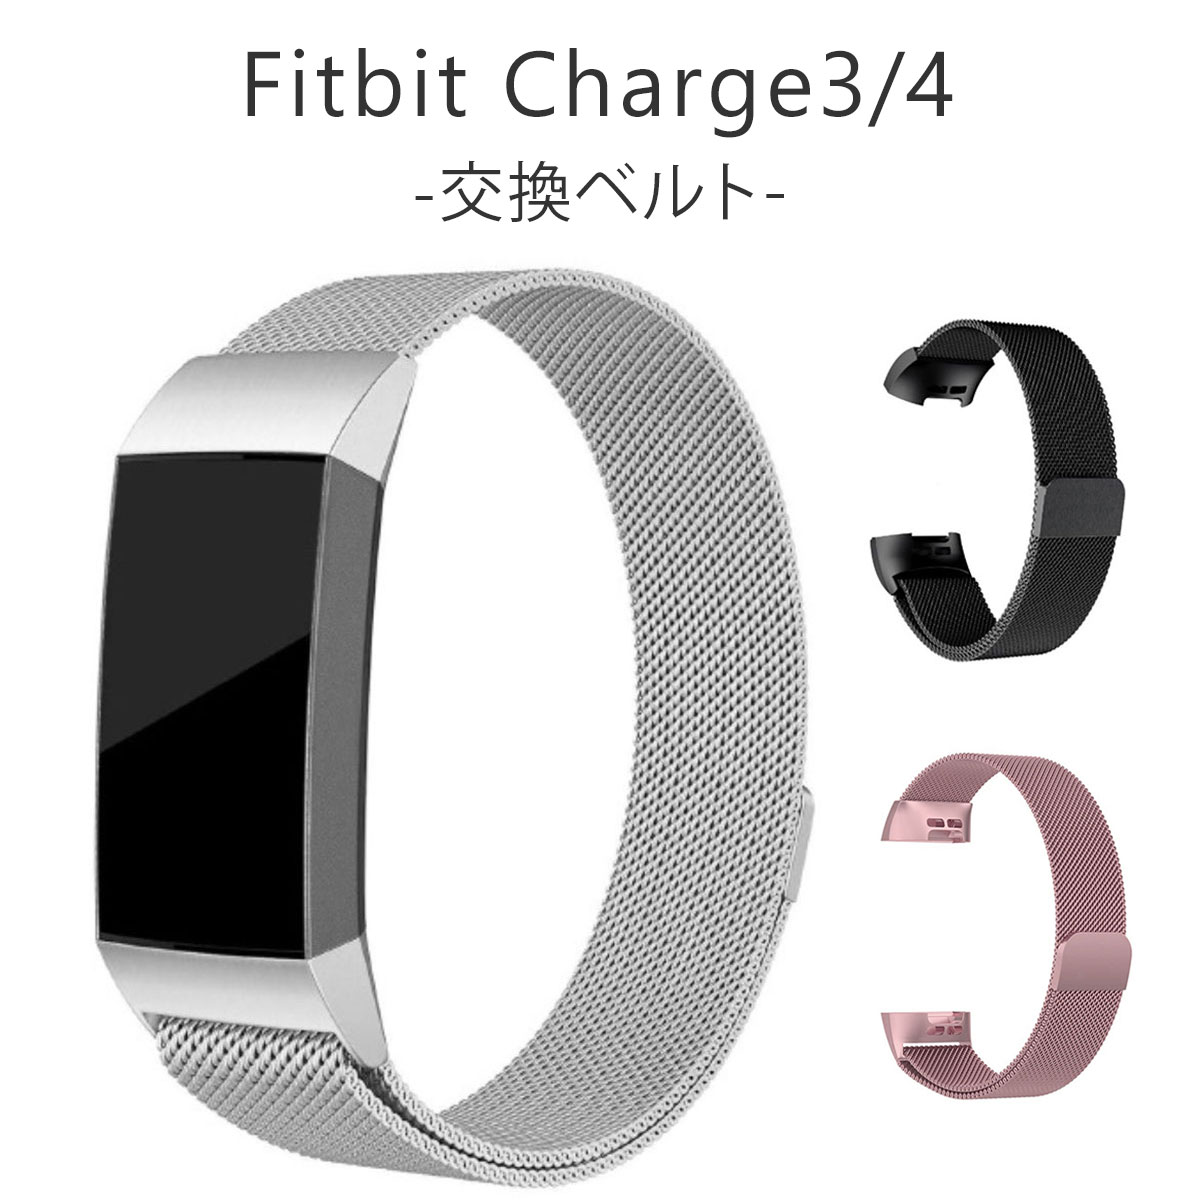 Fitbit Charge3 交換 バンド フィットビット チャージ3 ベルト Fitbit Charge3 Charge4 交換 バンド ベルト フィットビット チャージ 3 4 対応 ステンレス 互換品